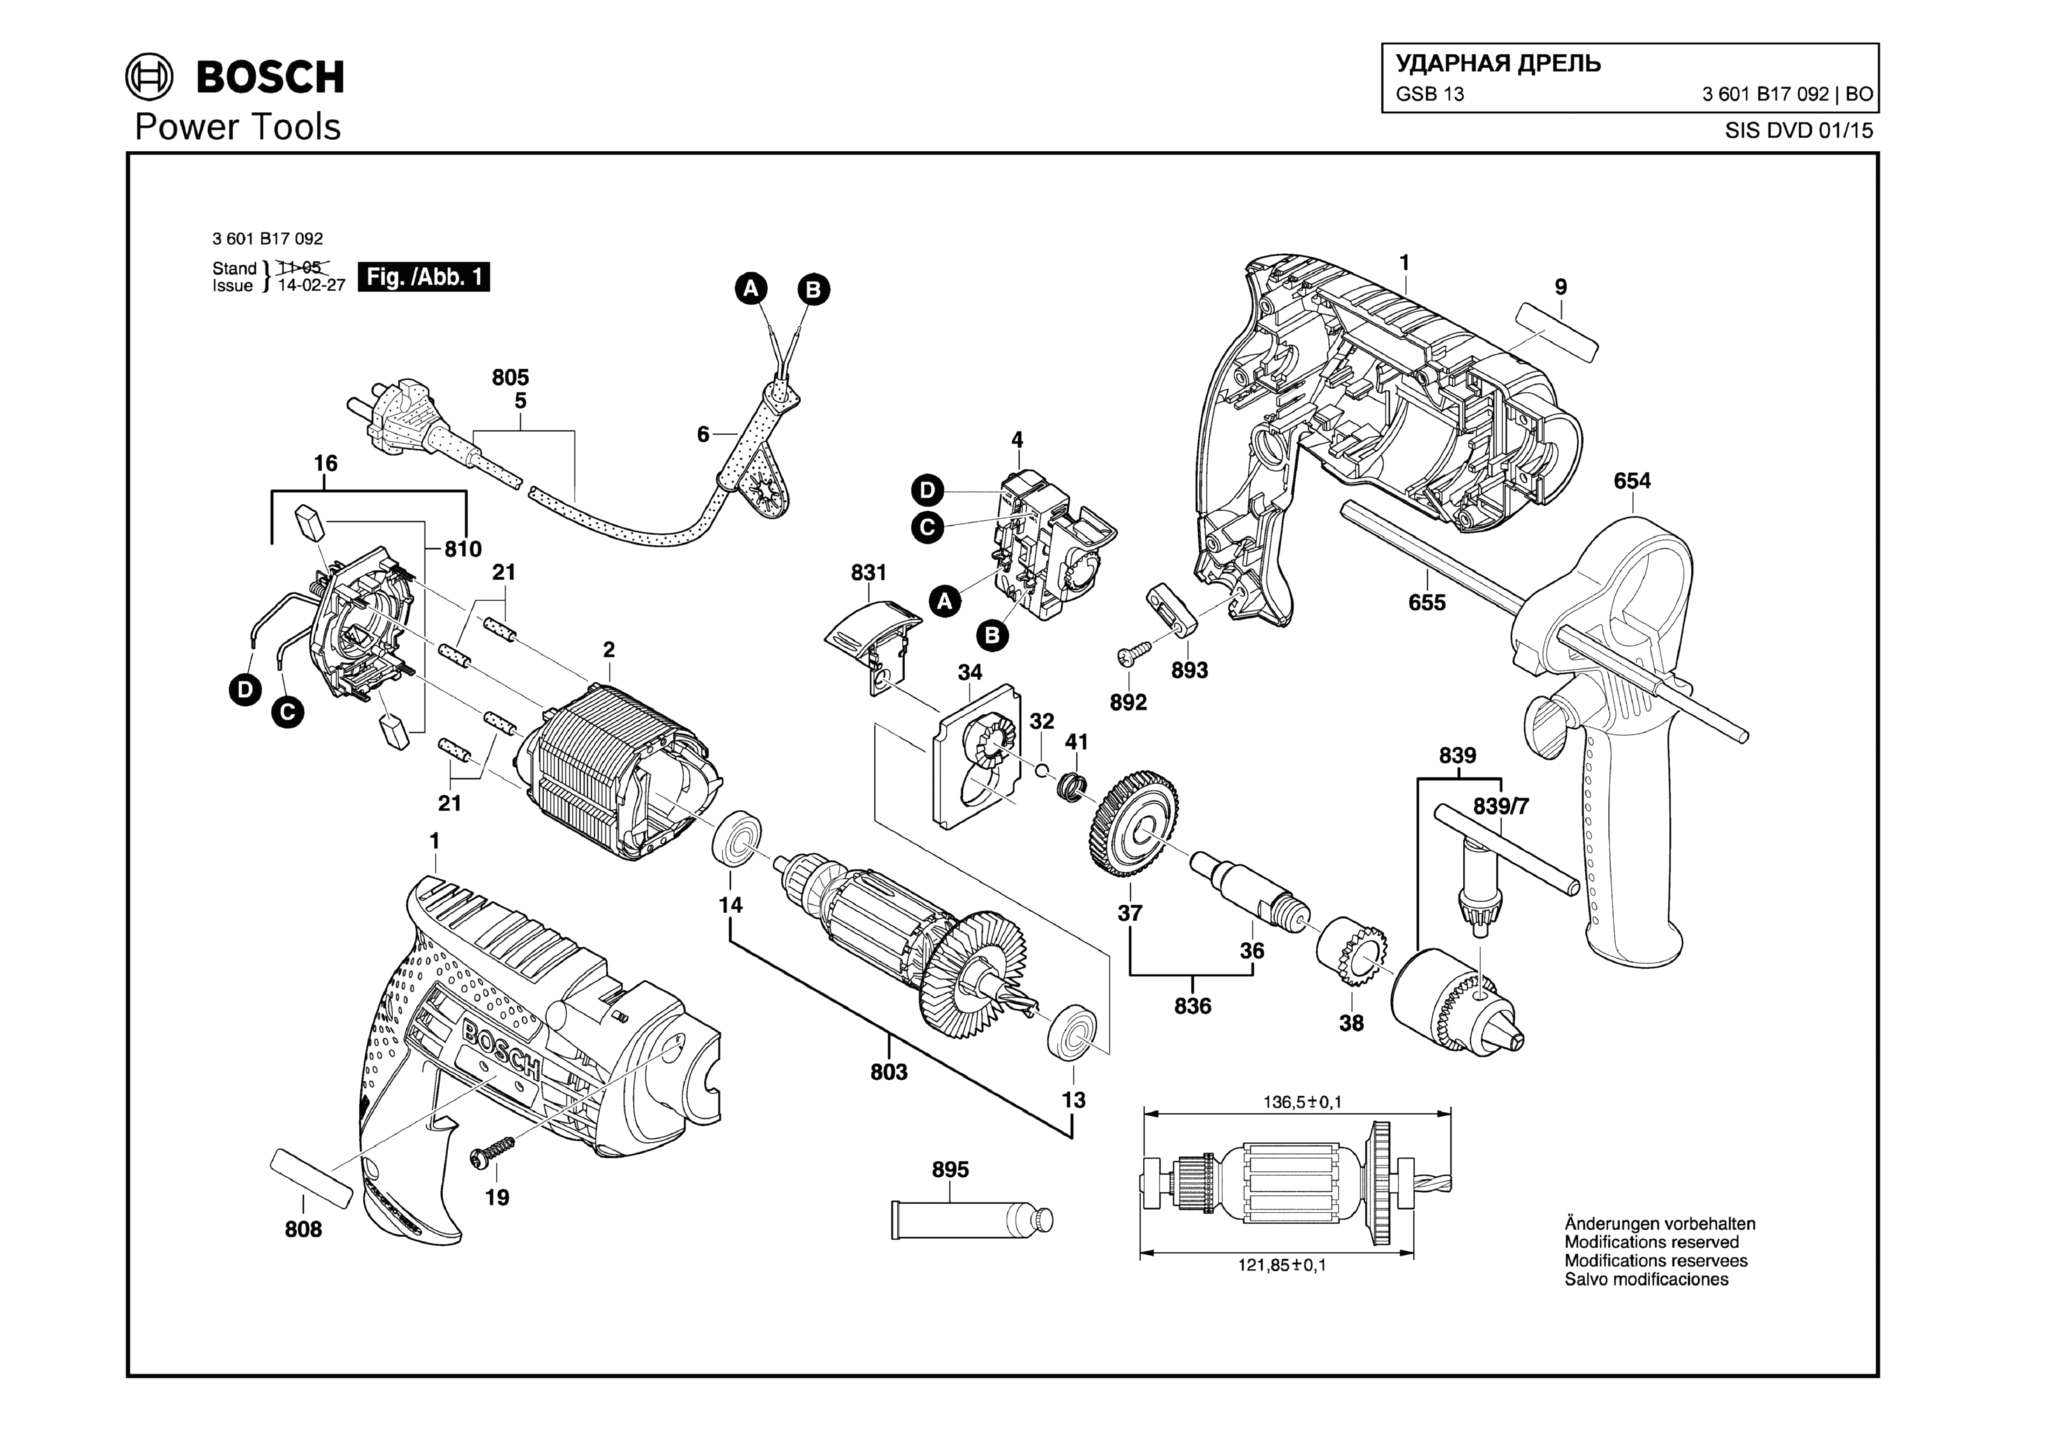 Запчасти, схема и деталировка Bosch GSB 13 (ТИП 3601B17092)